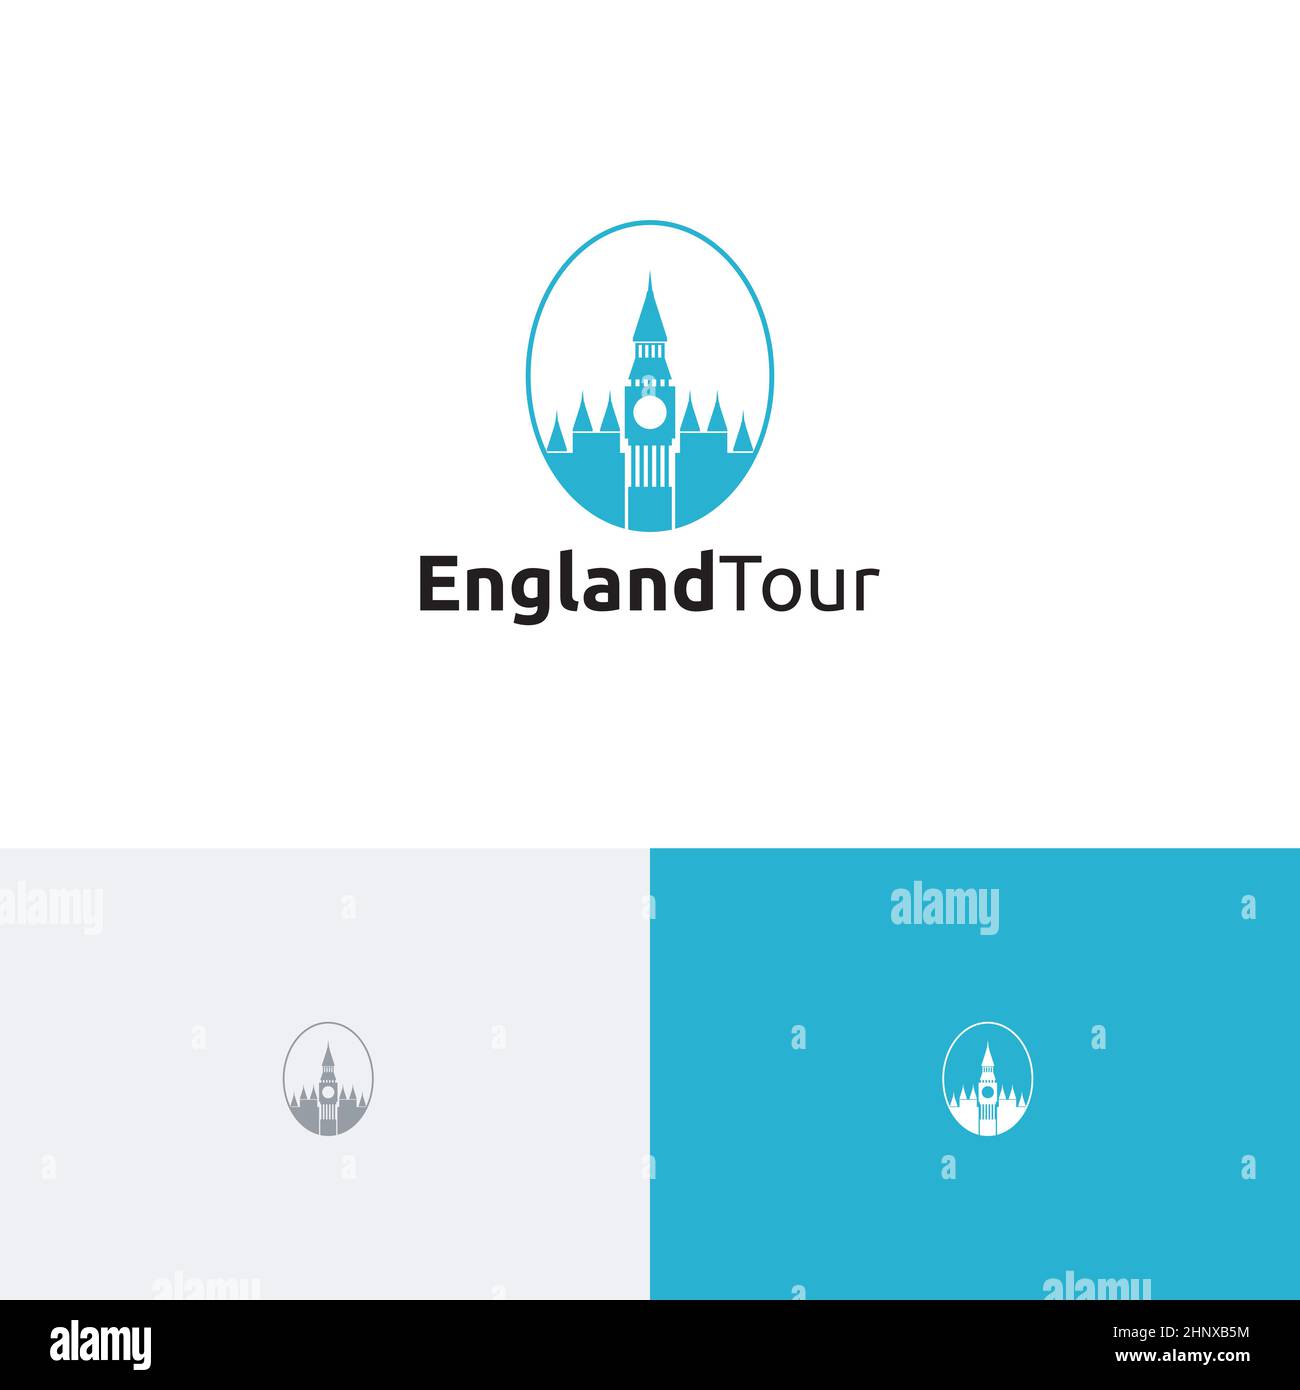 Big Ben London City England Tour Travel Holiday Holiday Agency logo Illustration de Vecteur